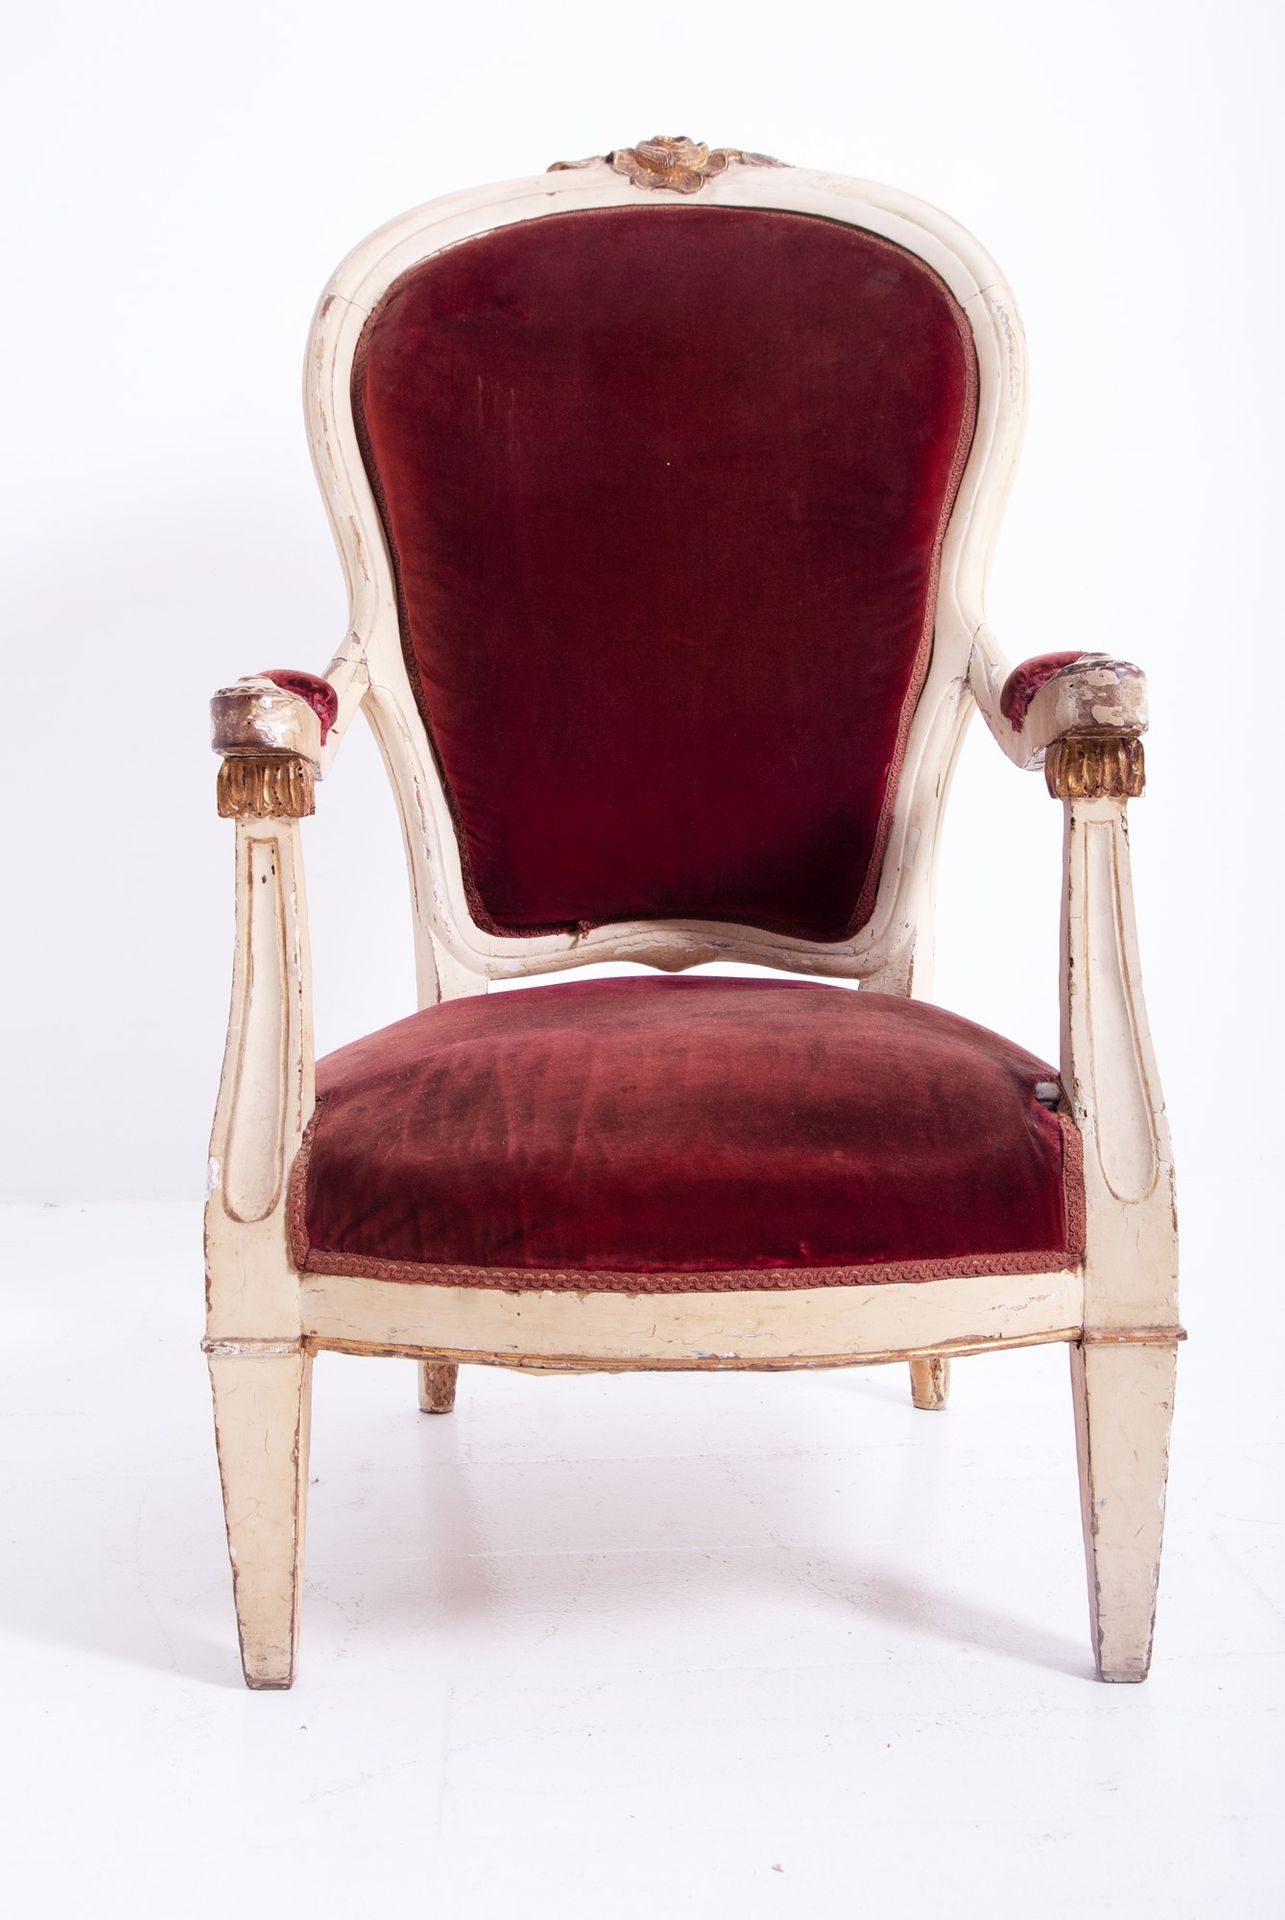 Armchair in lacquered wood 漆面木质扶手椅，内衬红色天鹅绒。热那亚。路易-菲利普时期。缺陷。